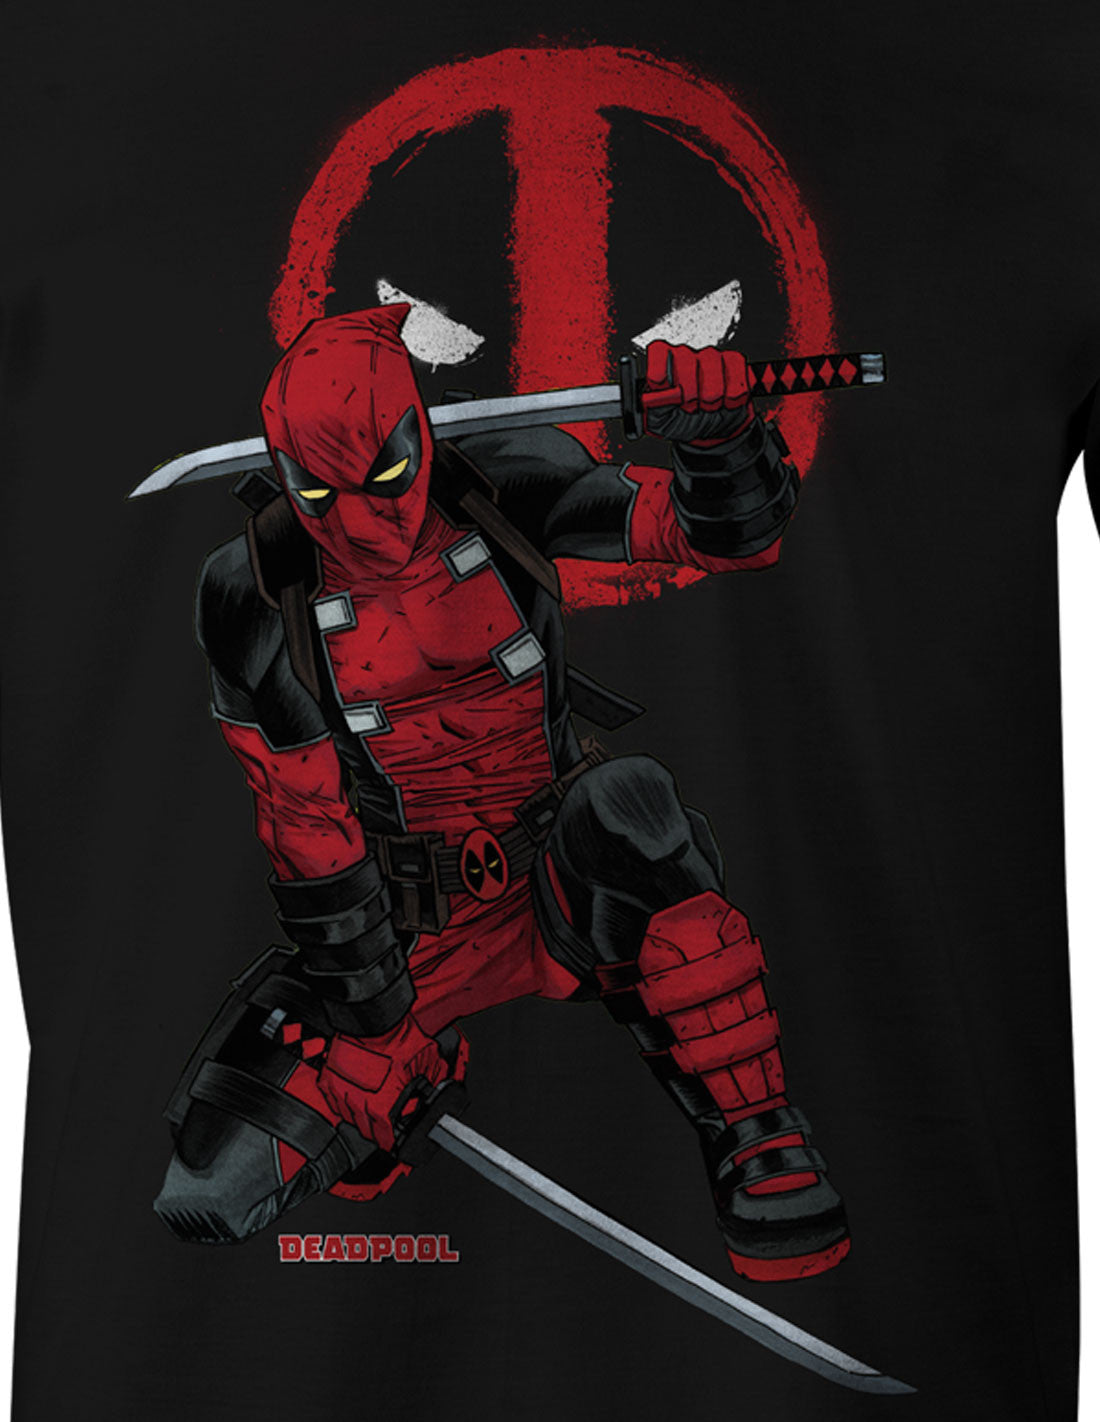 Marvel t-shirt - Deadpool Fight